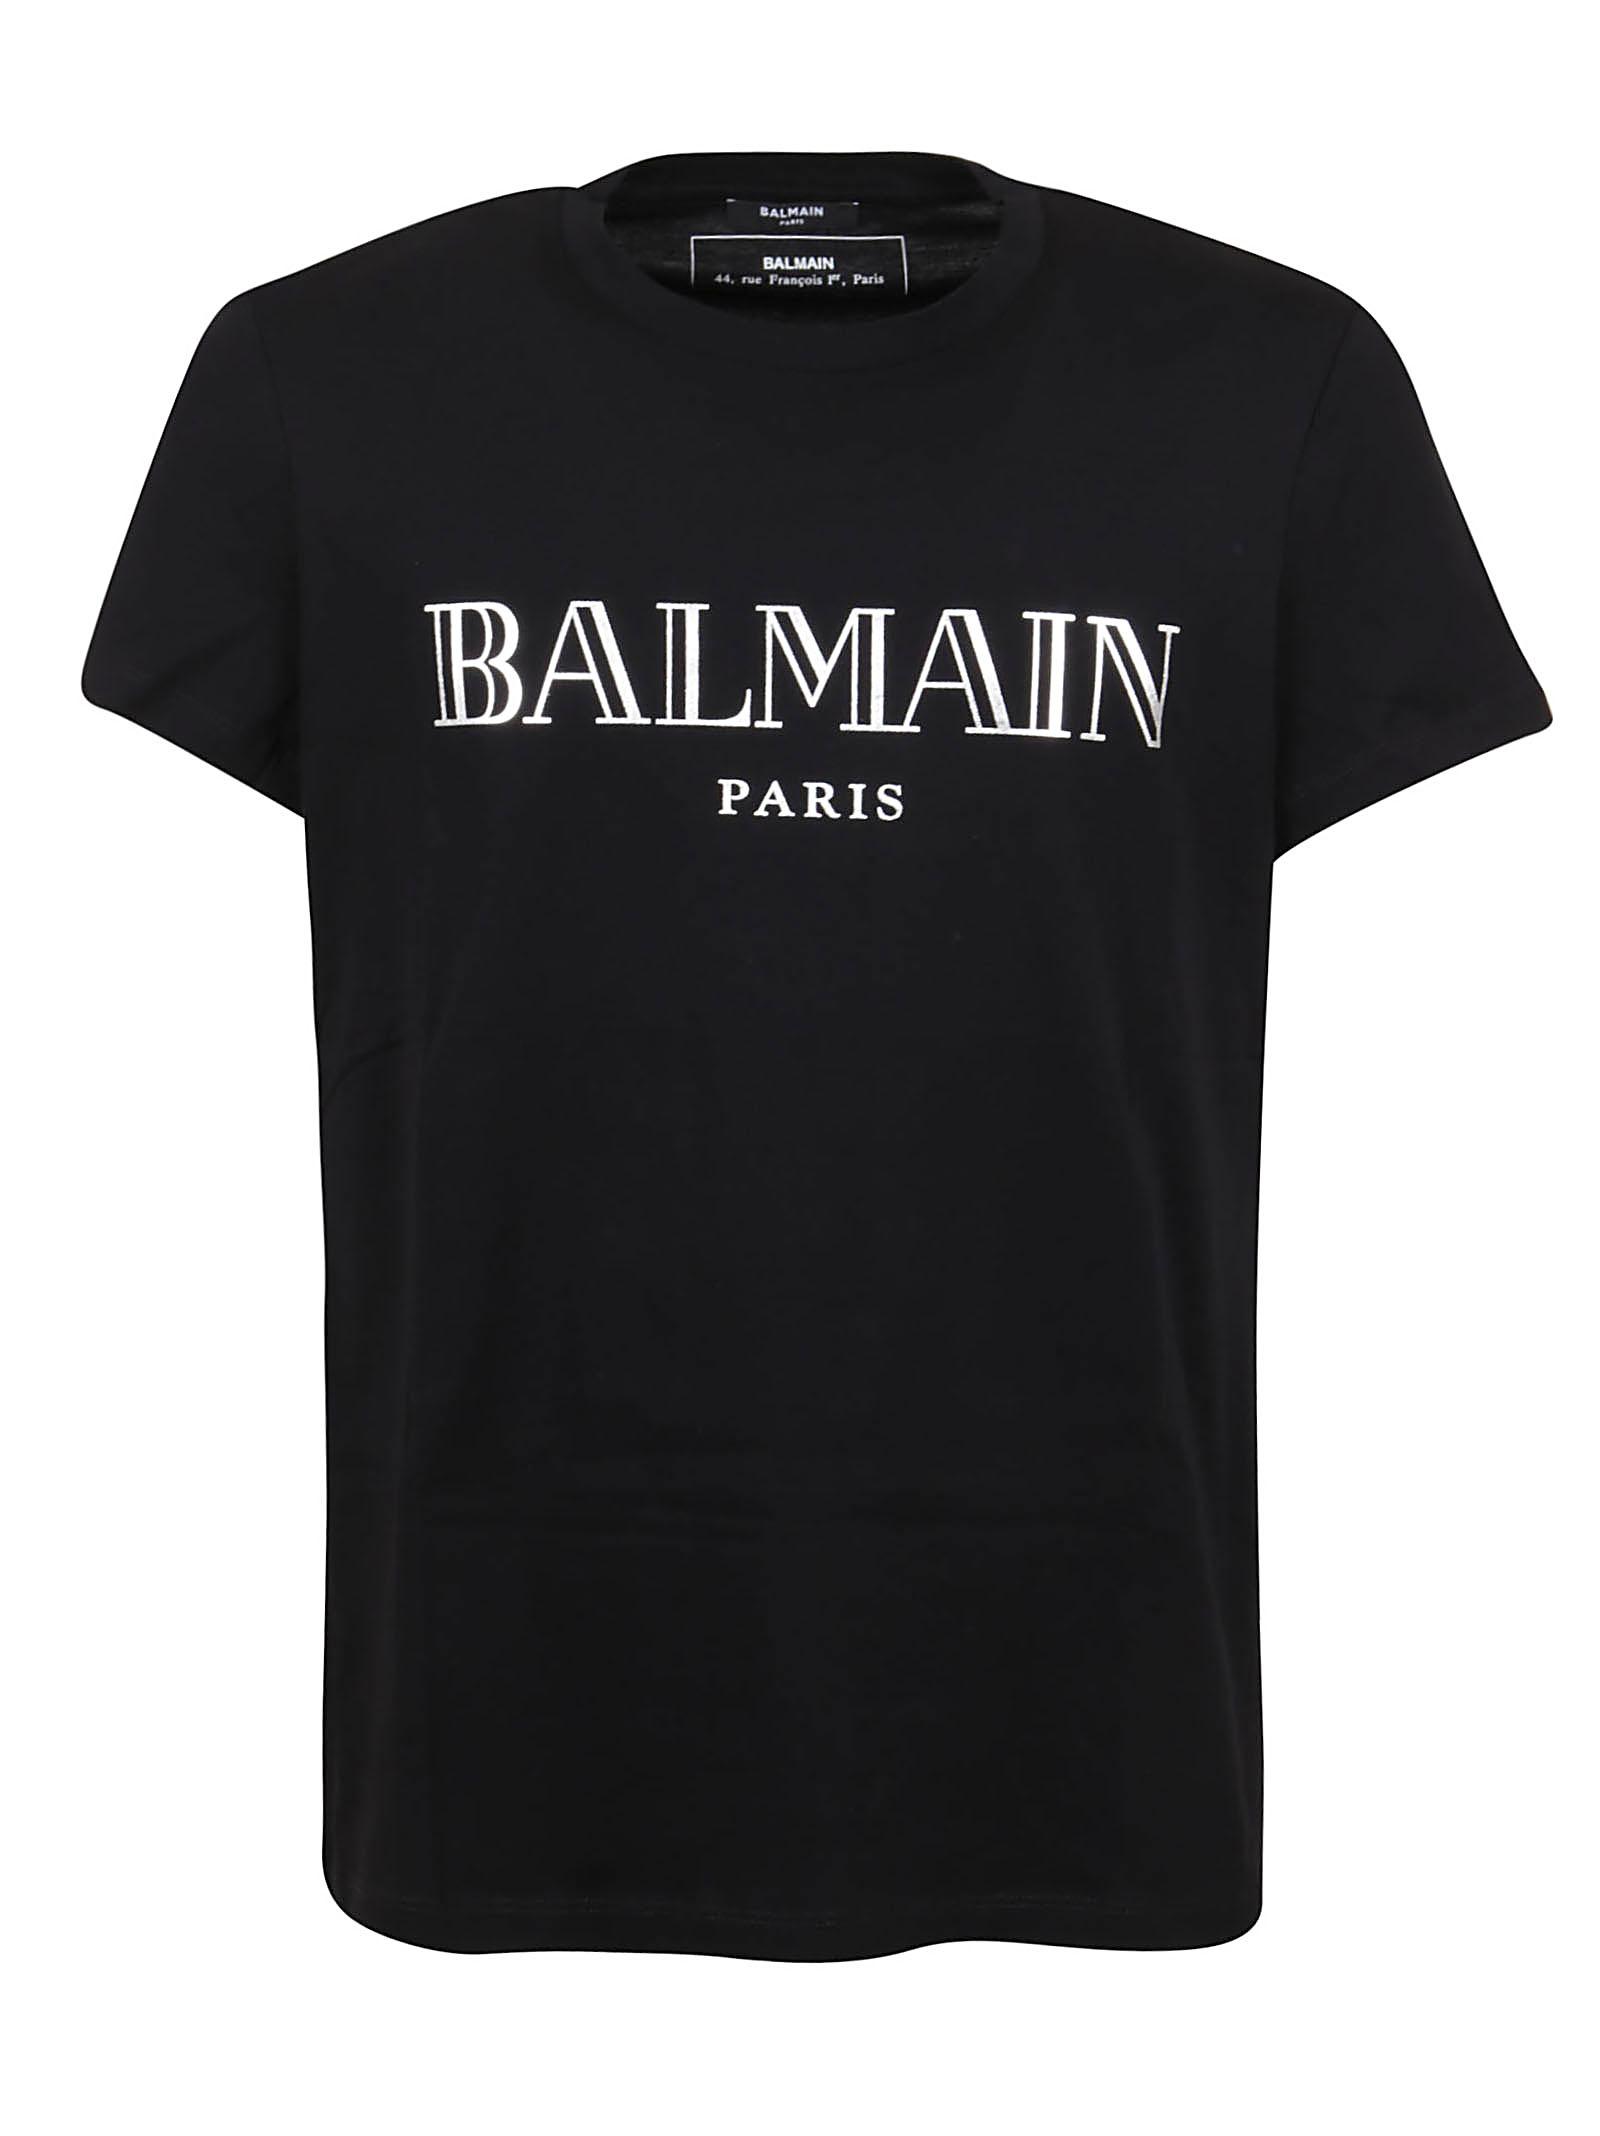 Balmain Cotton T-shirt Paris in Black - Lyst